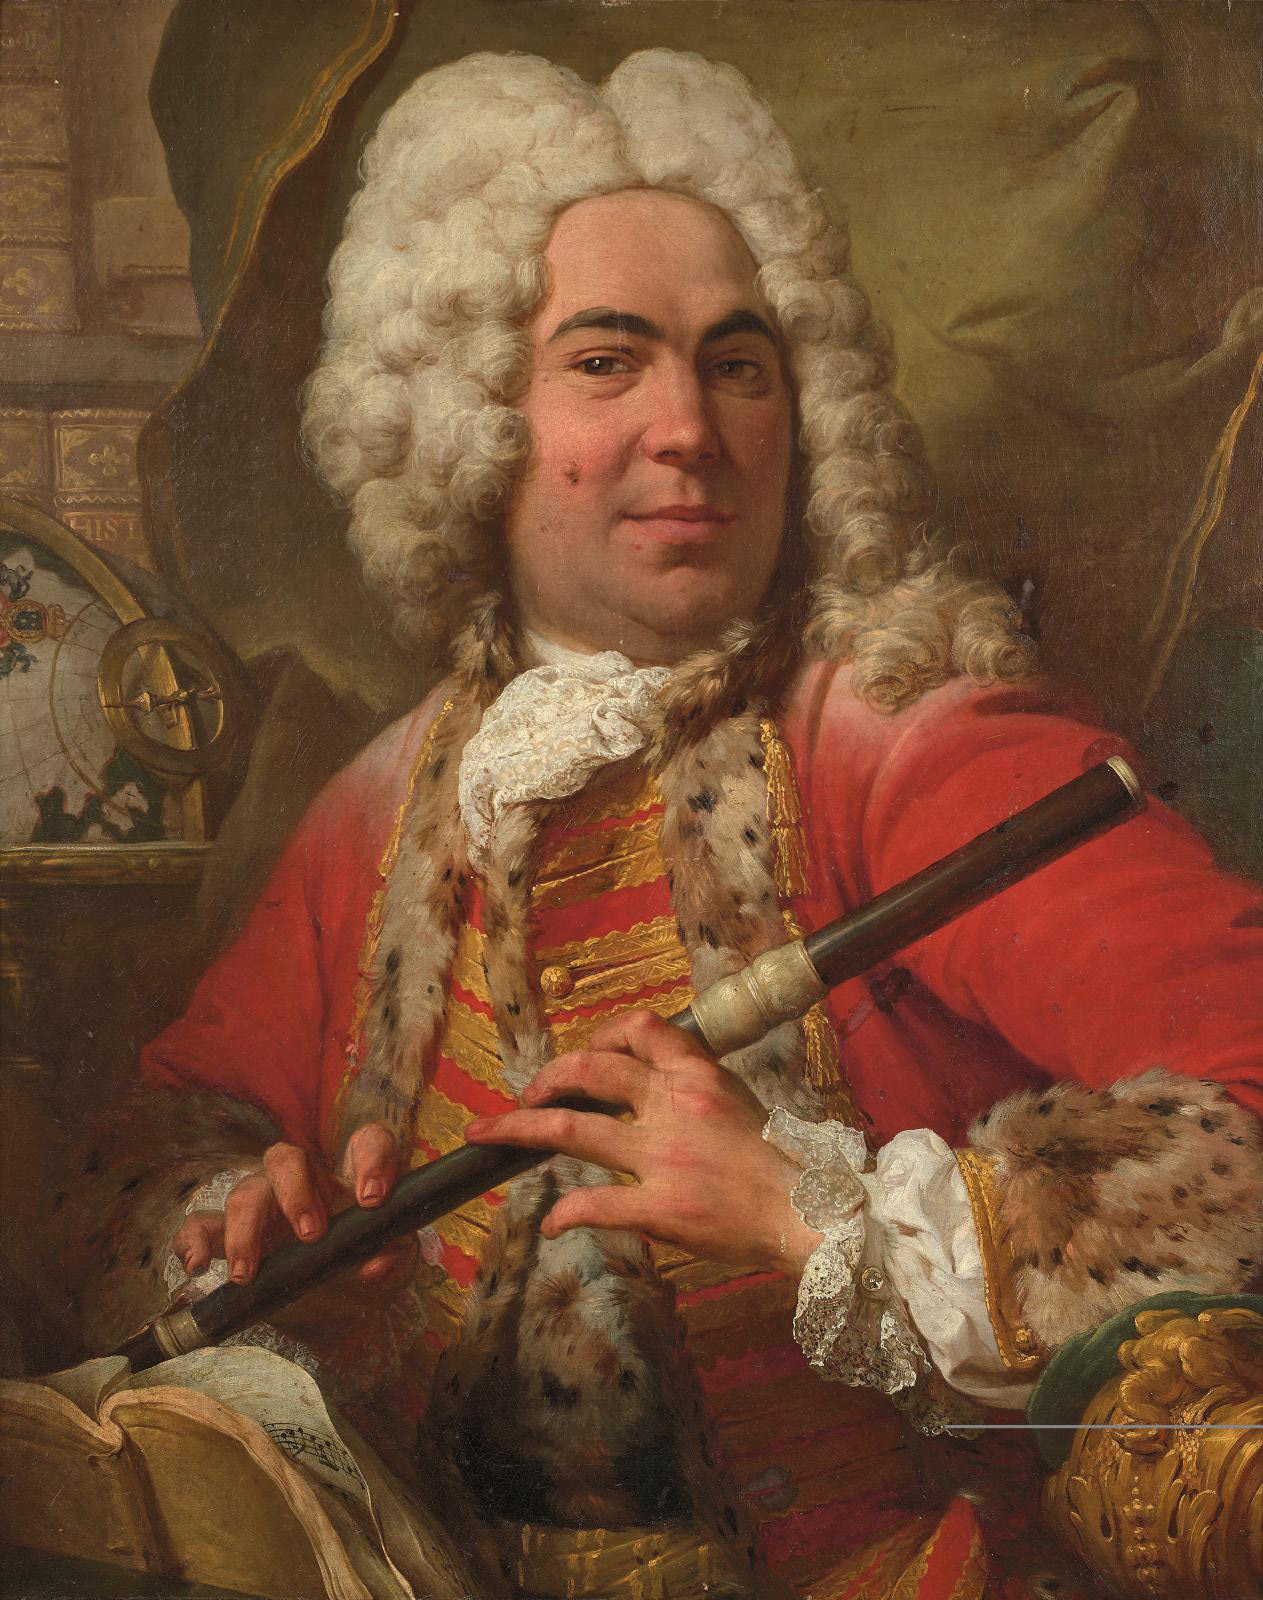 Triumph for a Brilliant but Anonymous 18th-Century Portraitist